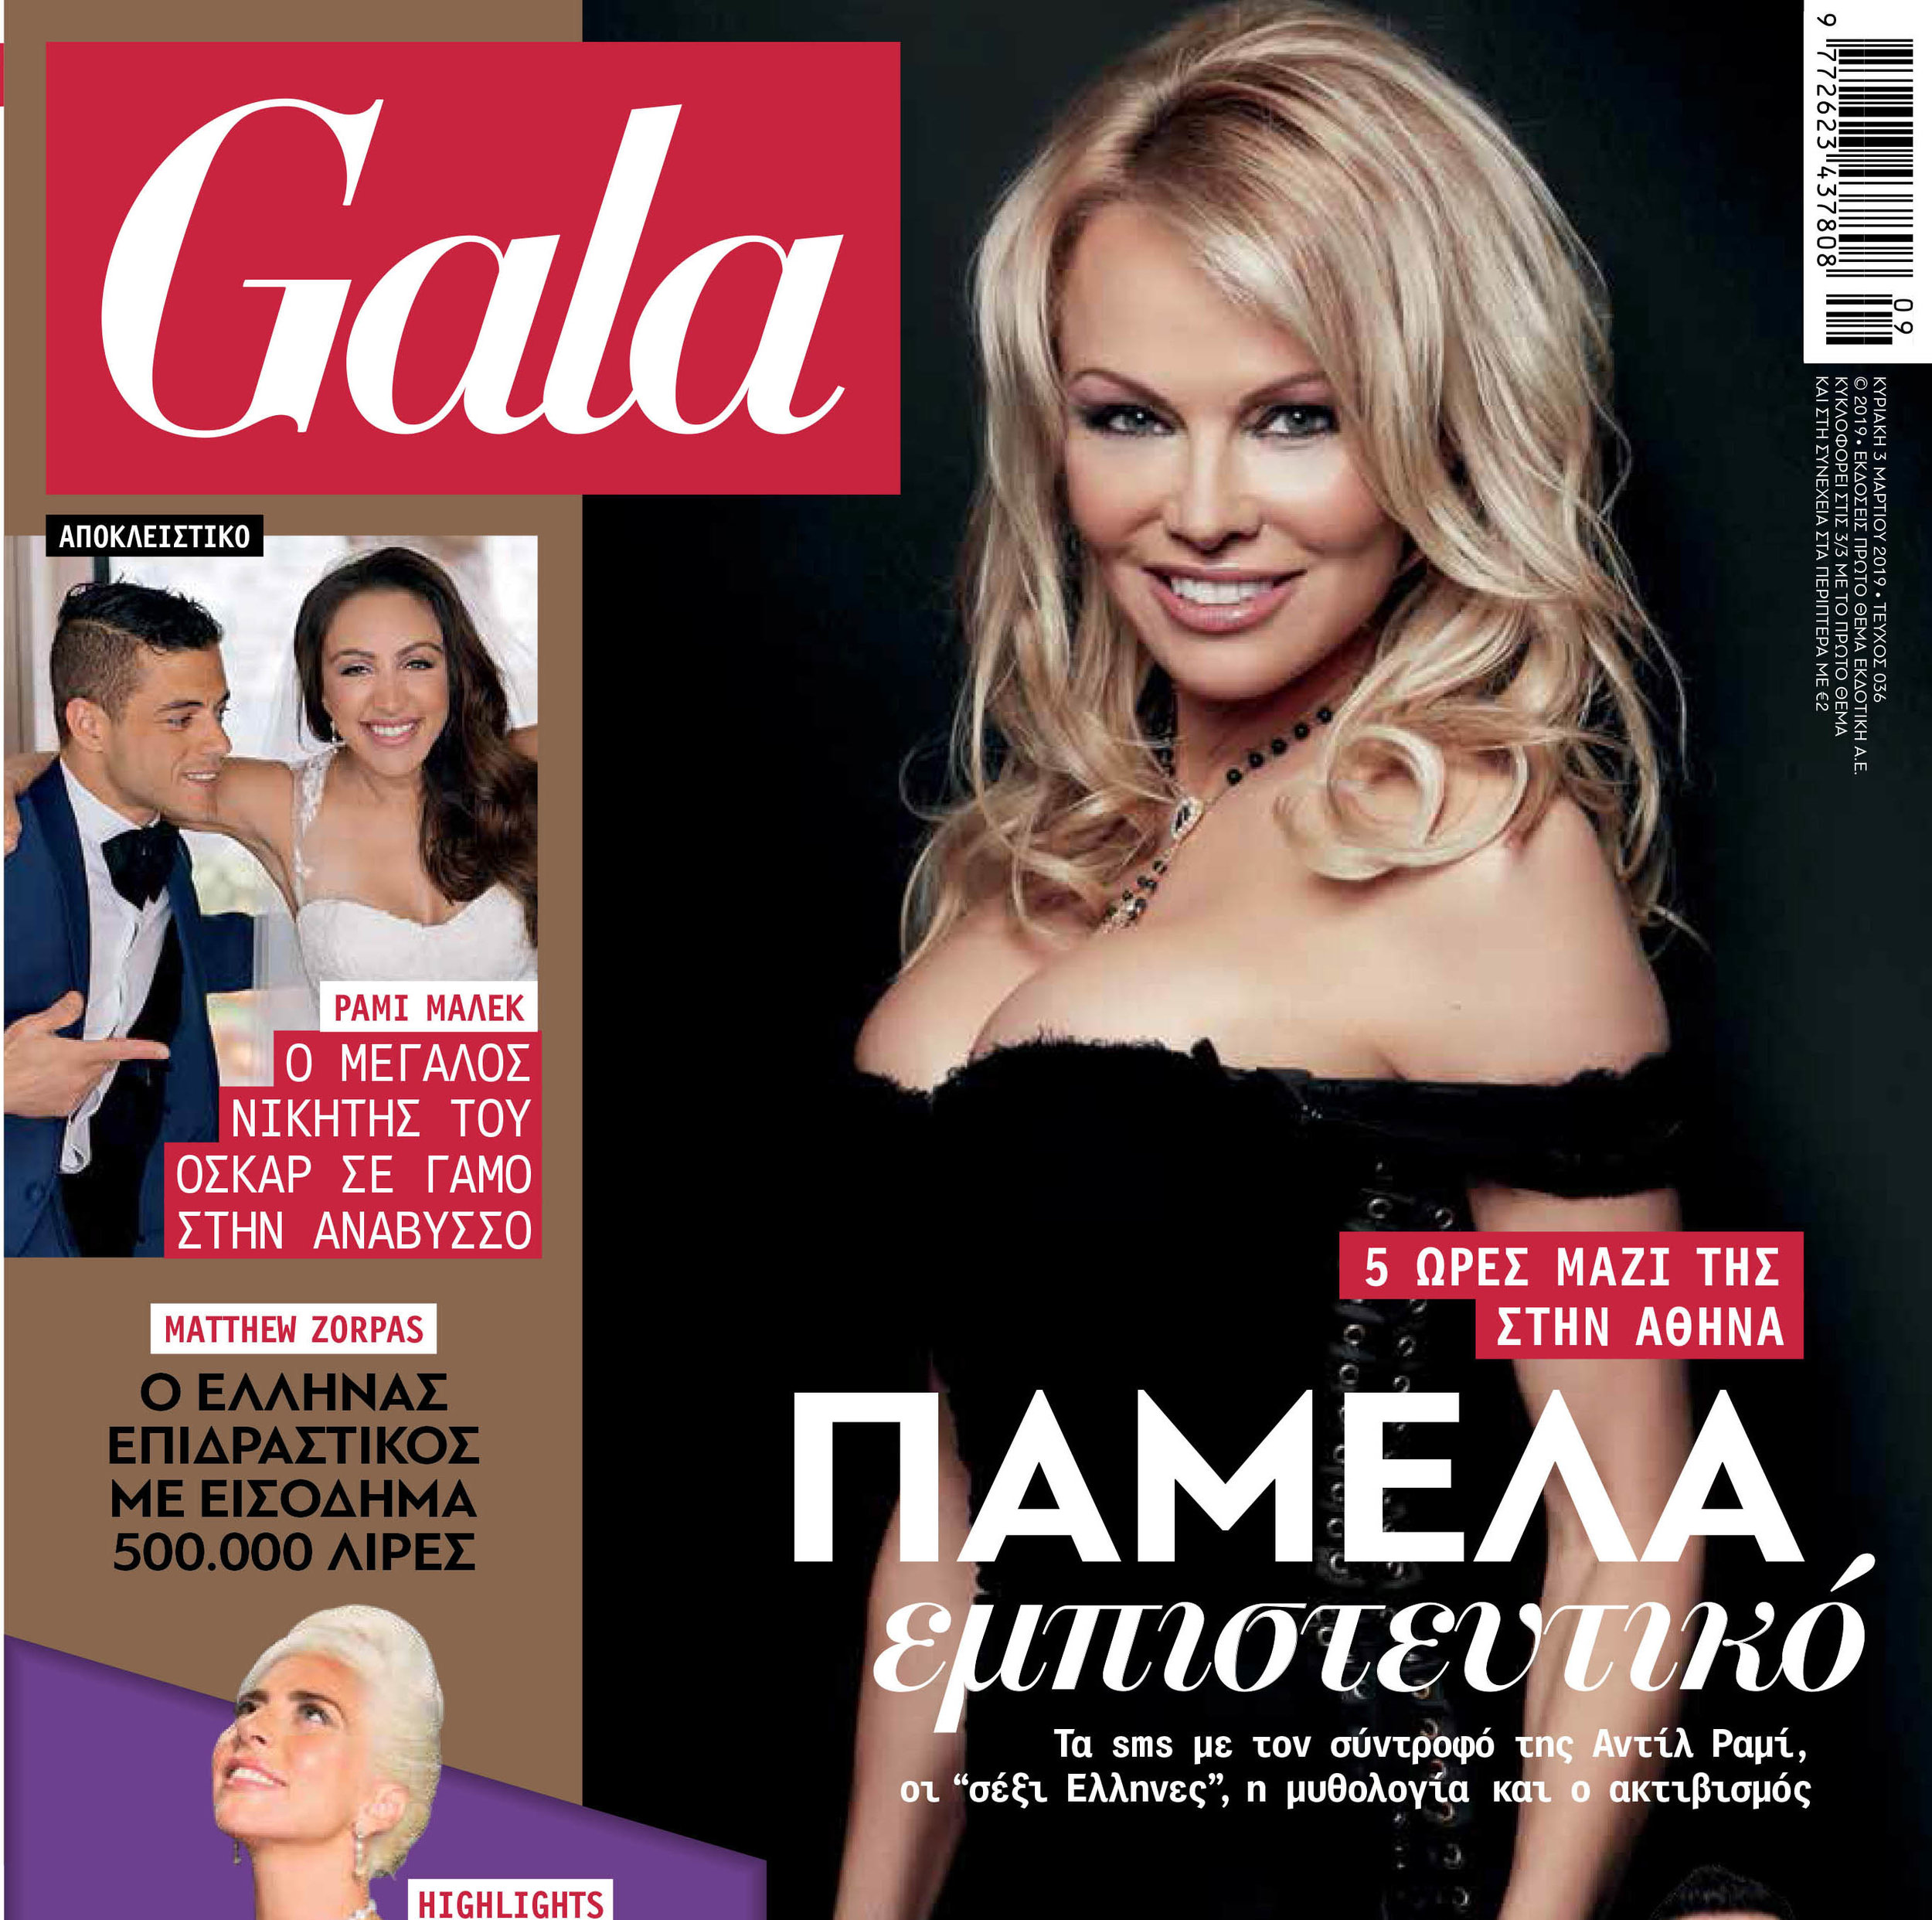 Gala Magazine March 2019